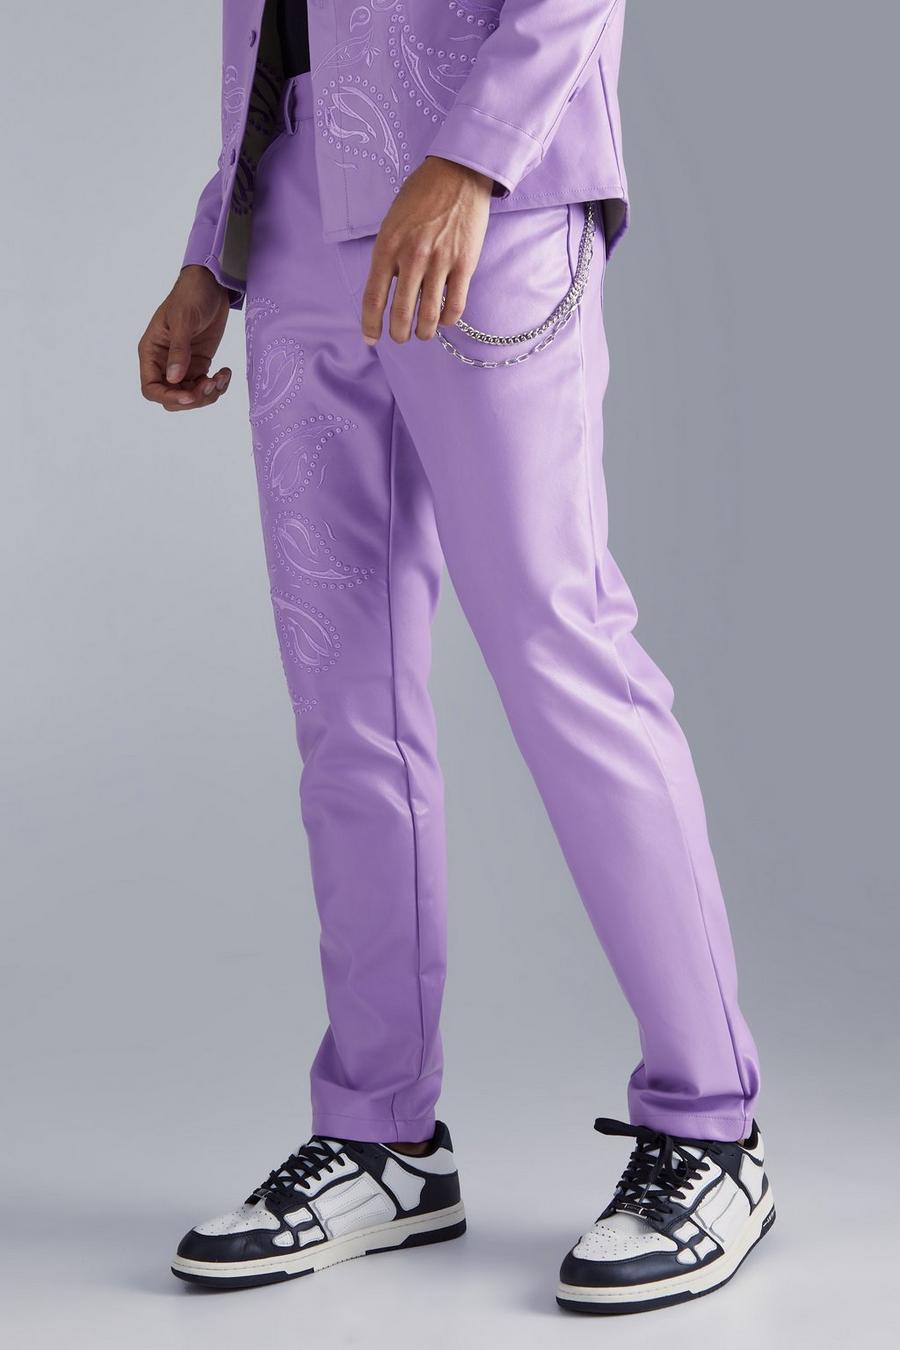 Pantaloni Slim Fit in PU in fantasia cachemire con ricami, Lilac